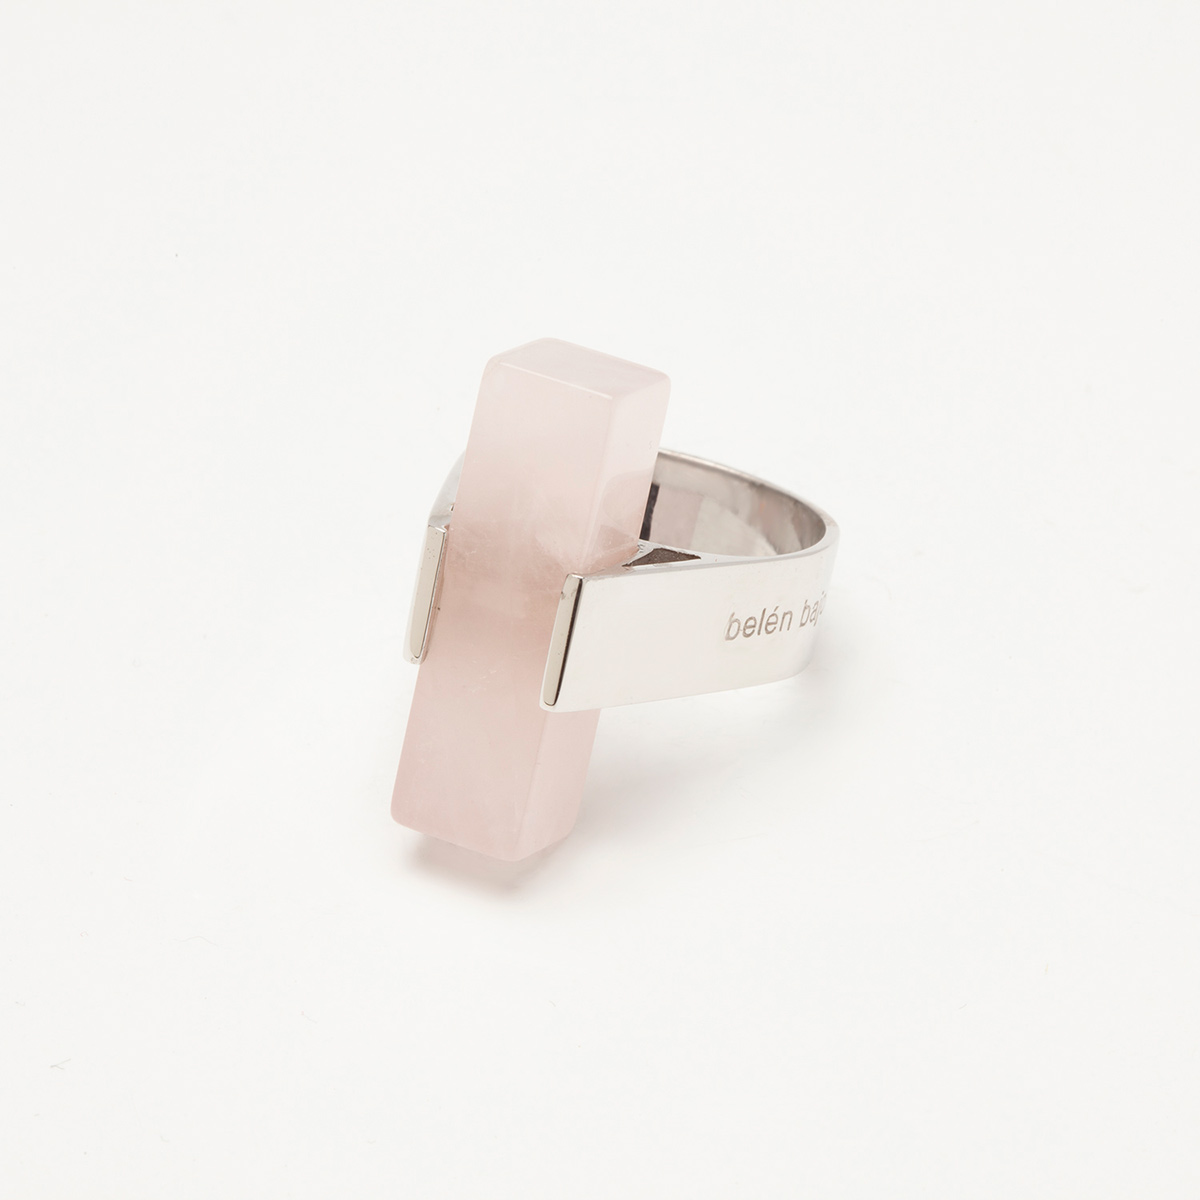 Ian handmade sterling silver and rose quartz ring 1 designed by Belen Bajo